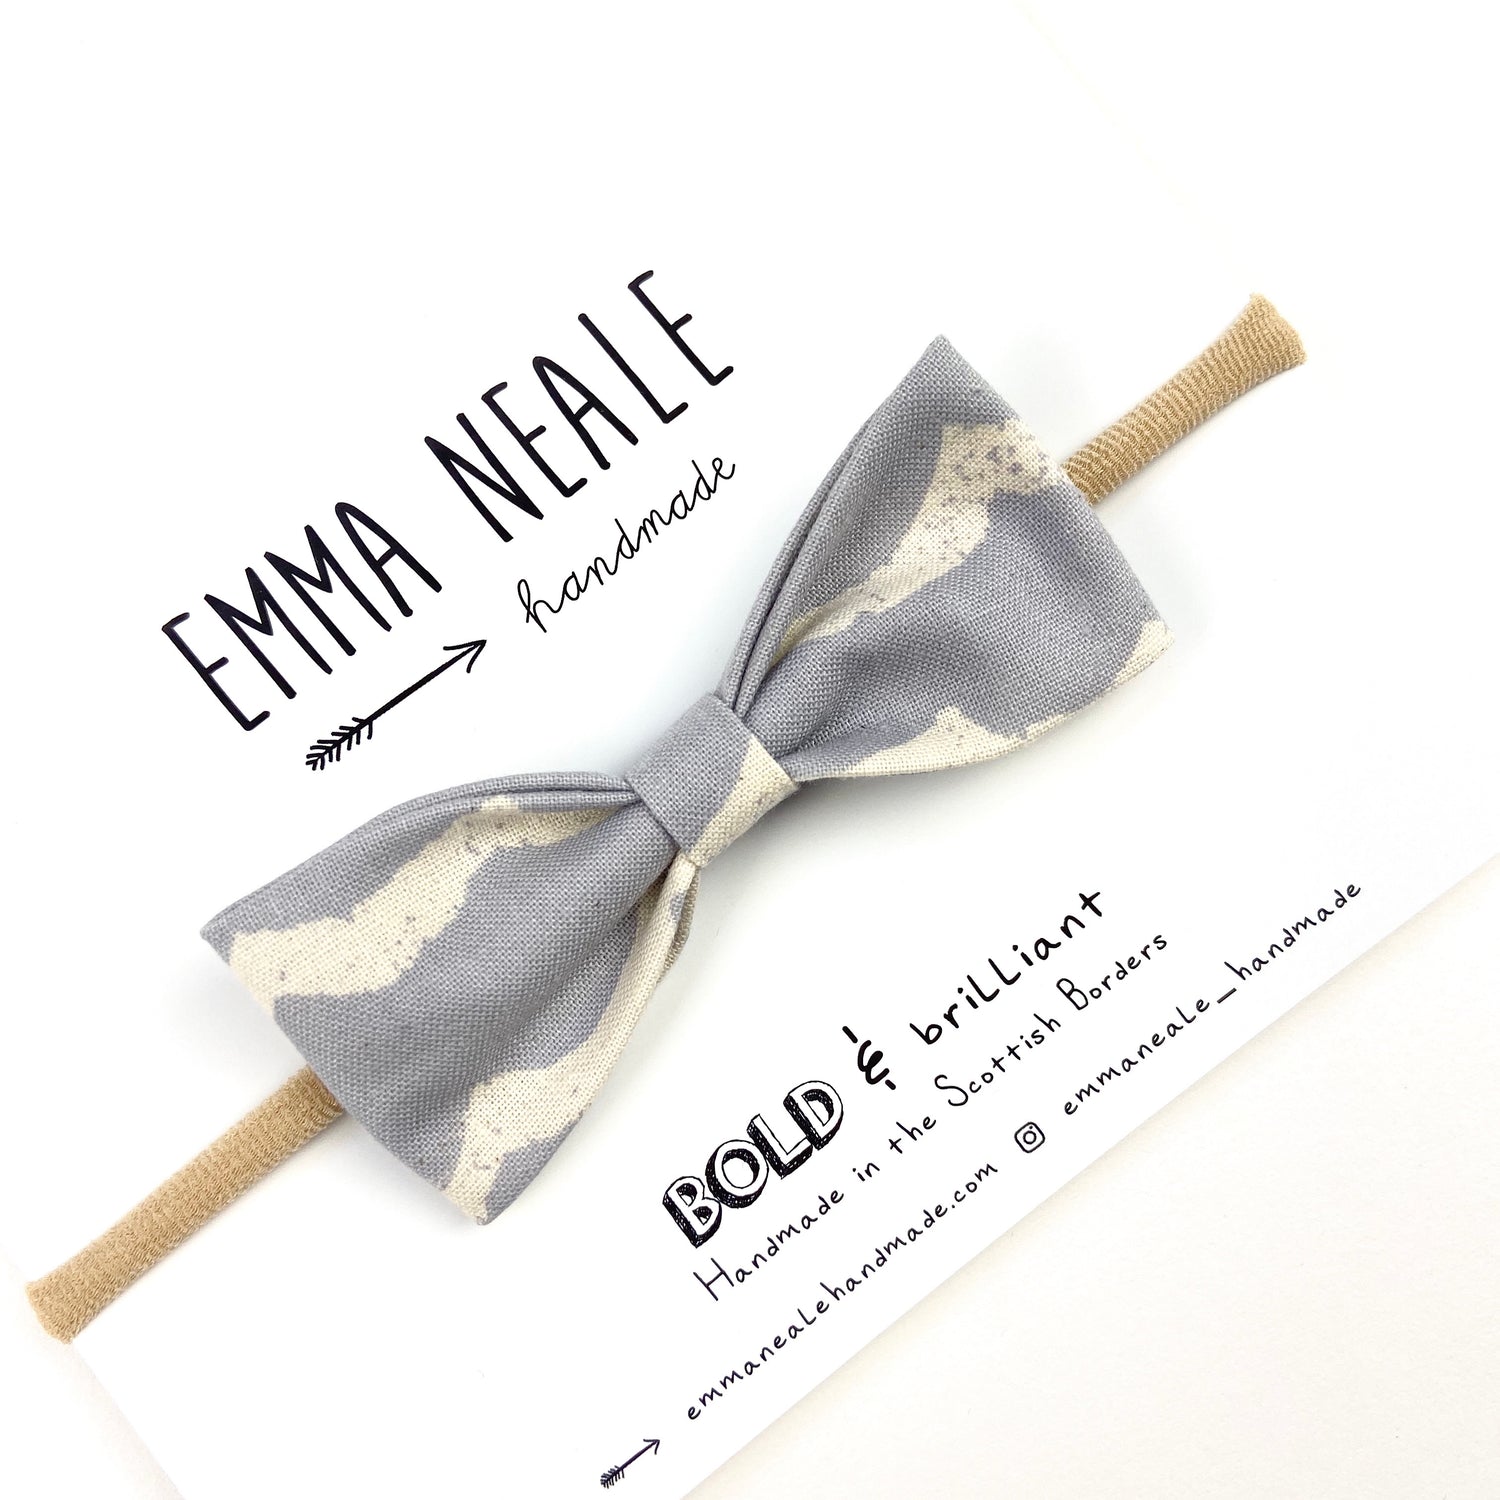 Wave Ruby Bow Headband - Emma Neale Handmade